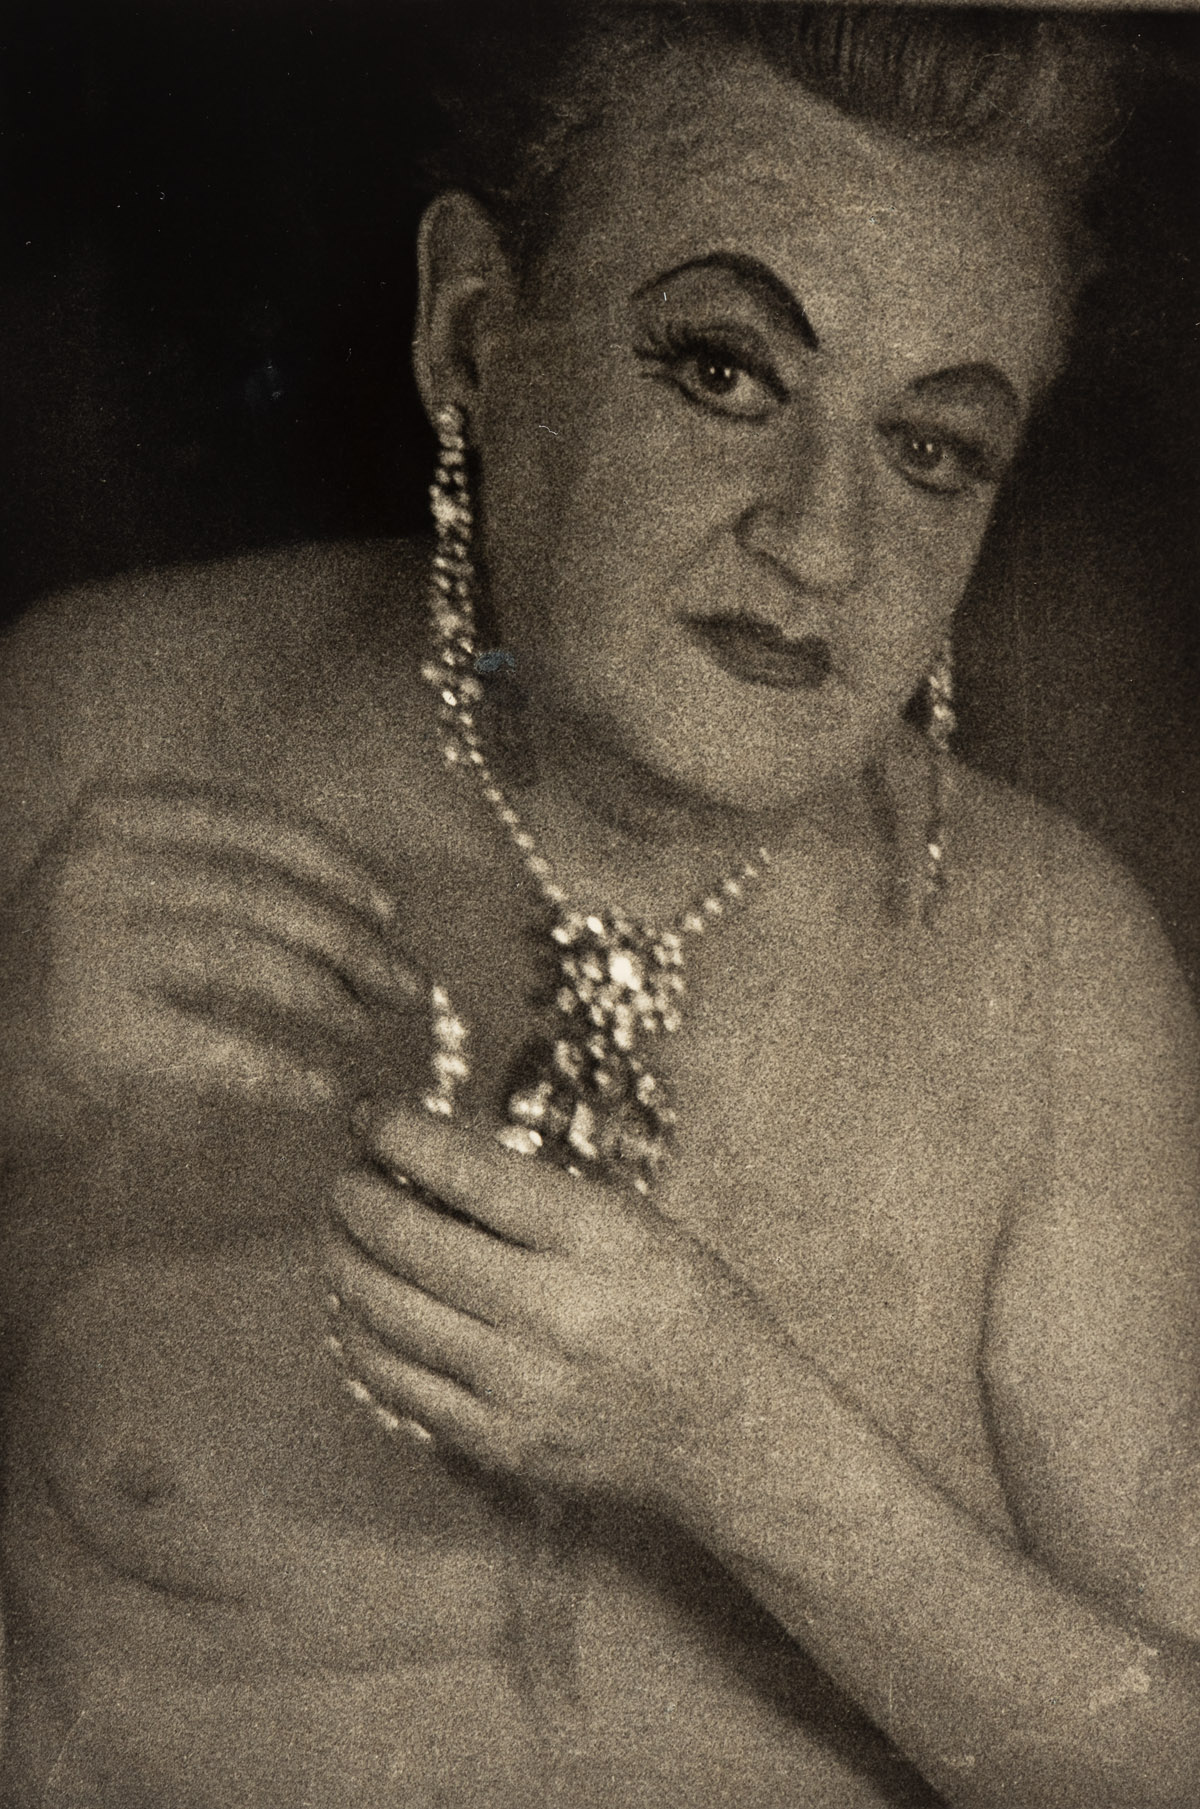 DIANE ARBUS (1923-1971) Female impersonator with jewels, N.Y.C.